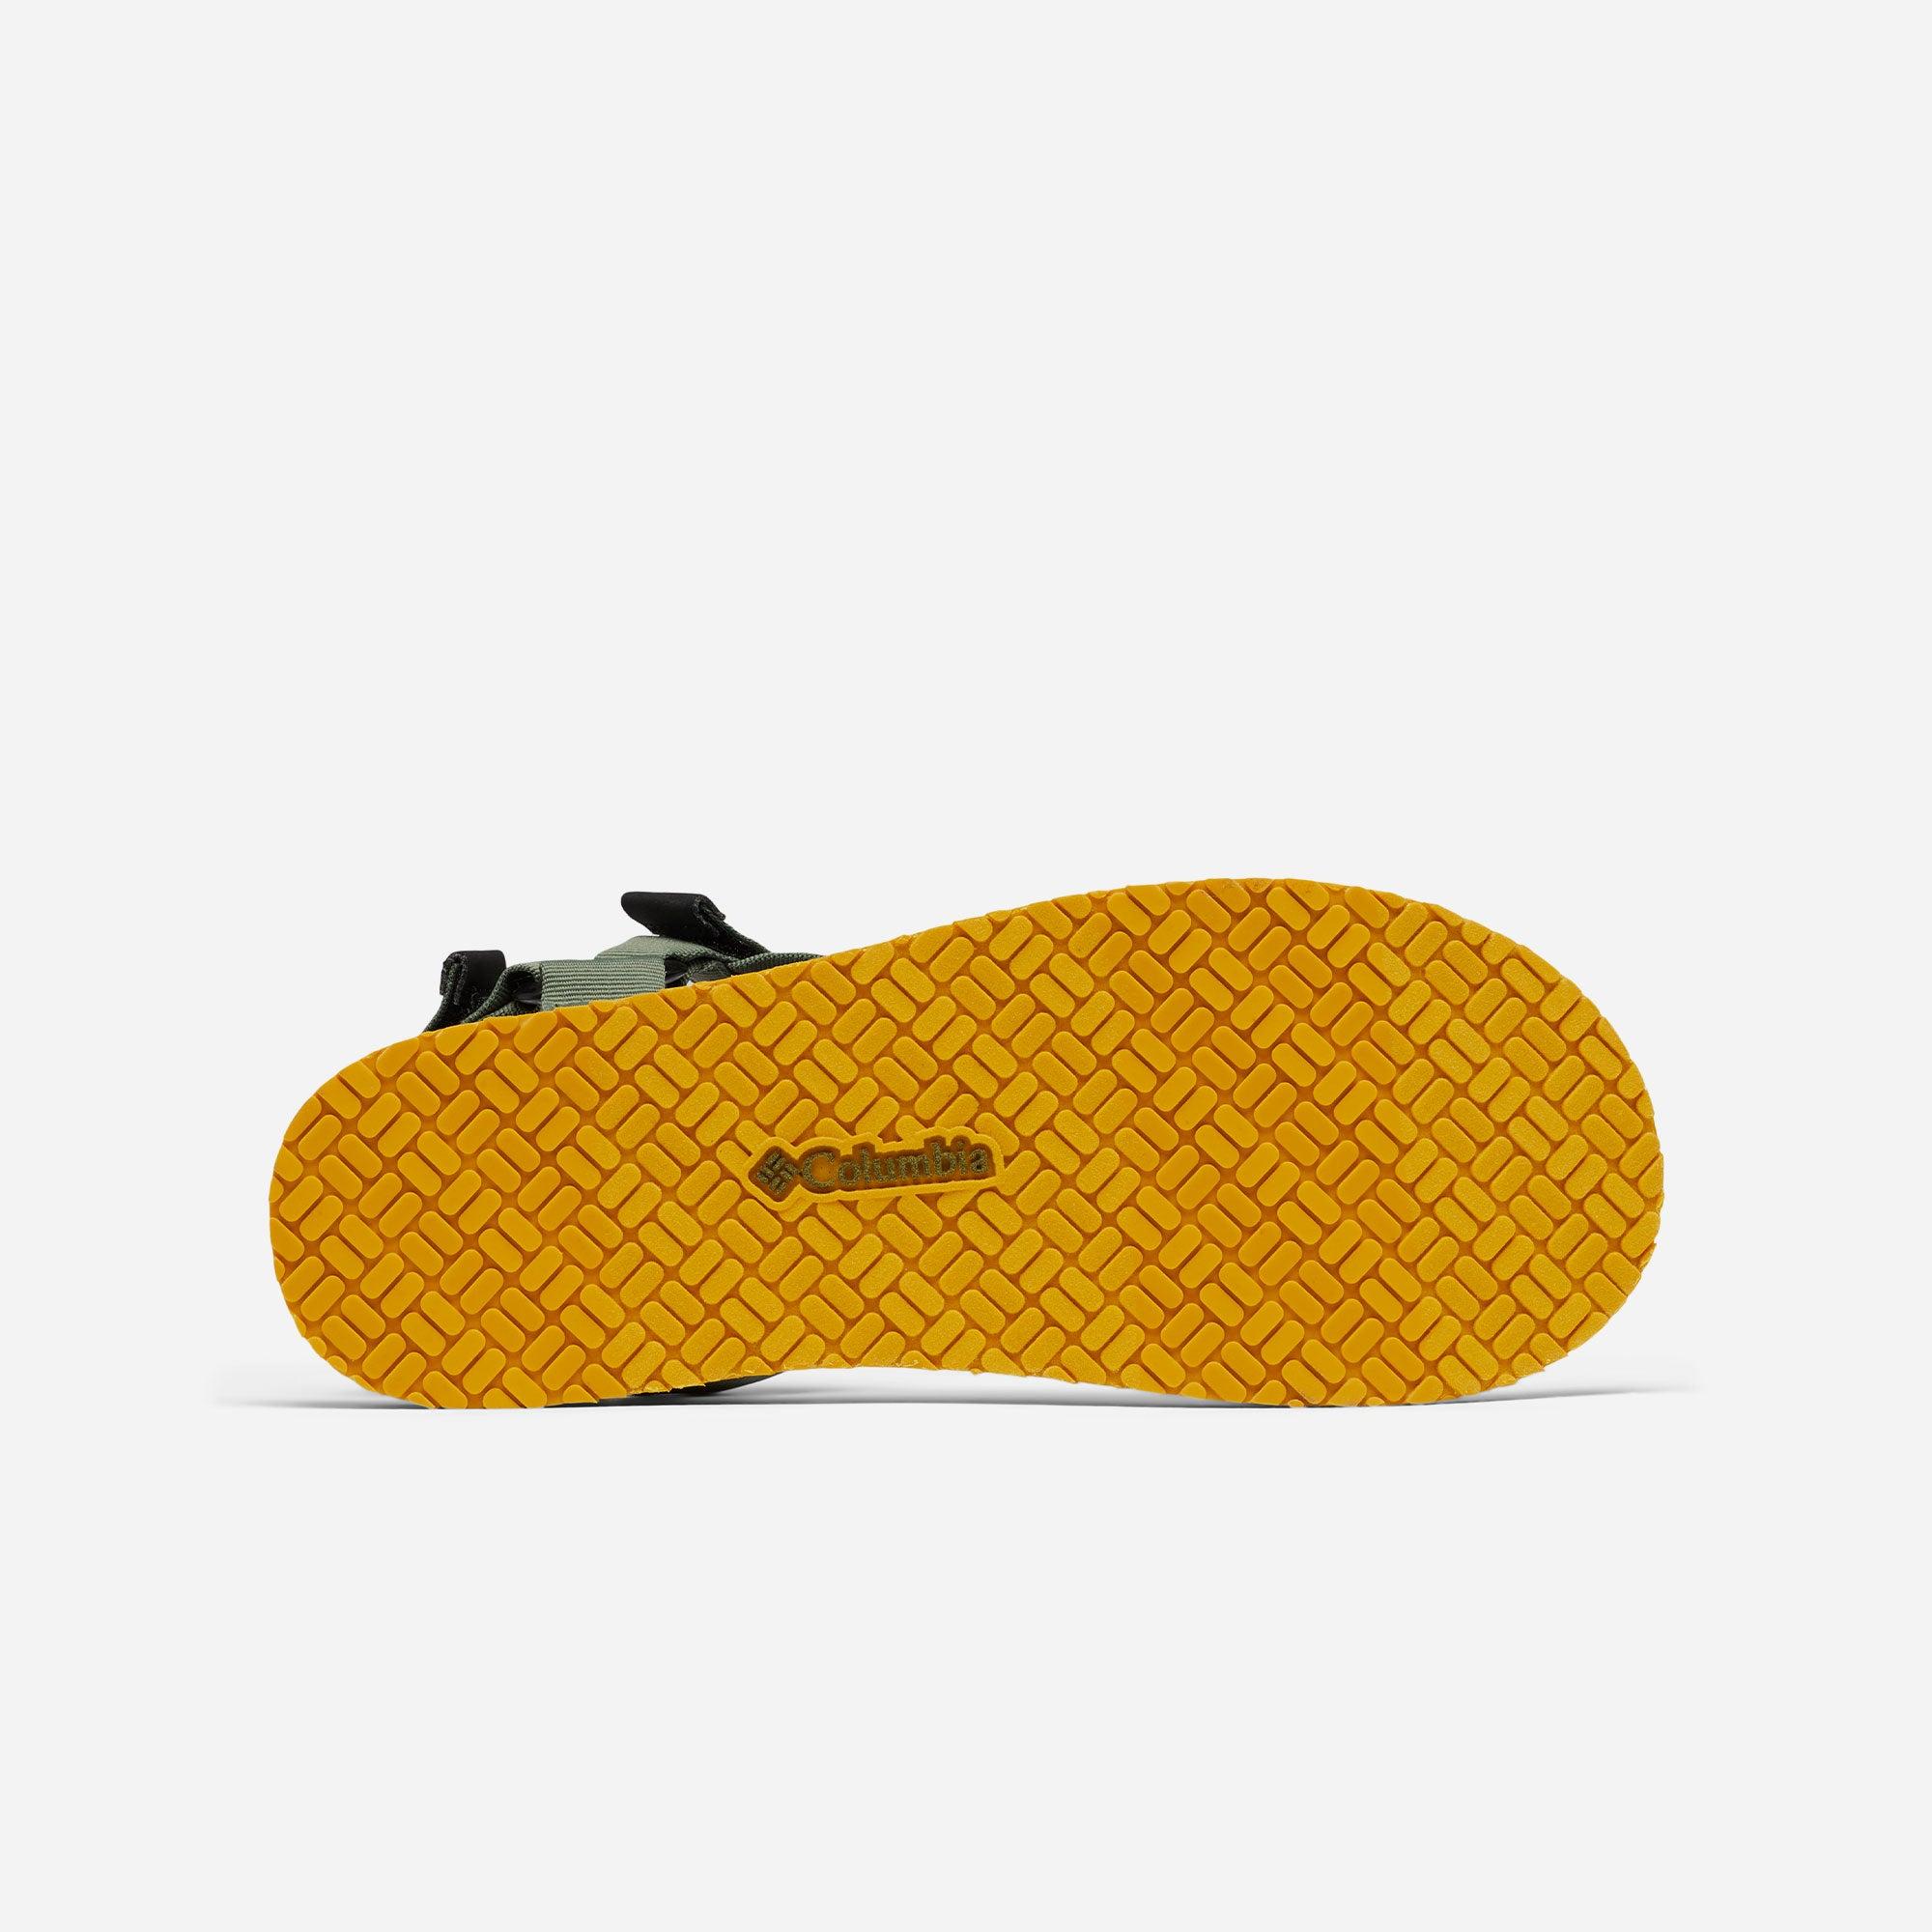 Giày sandal nam Columbia Breaksider - 2027191302